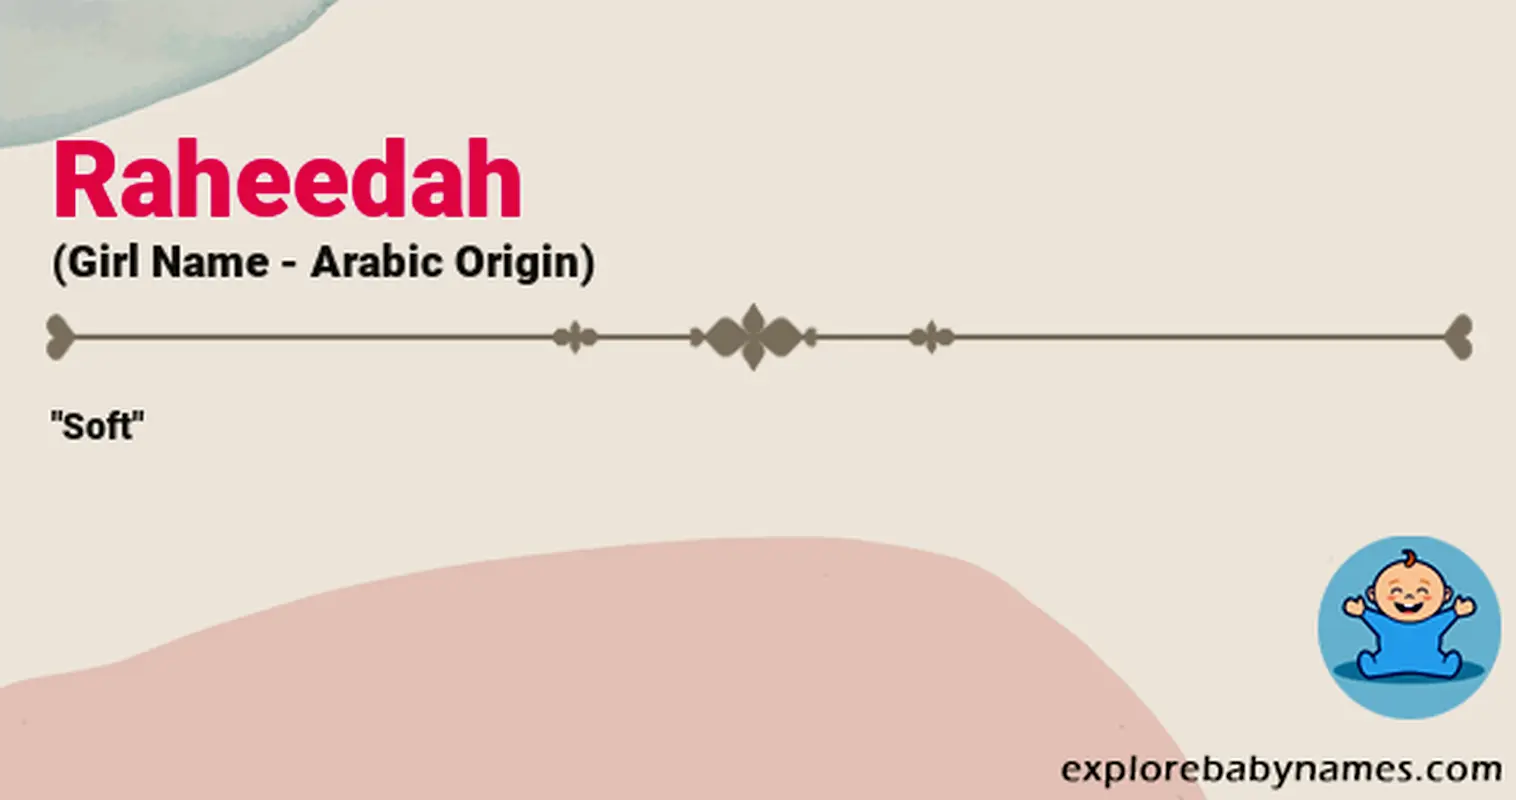 Meaning of Raheedah